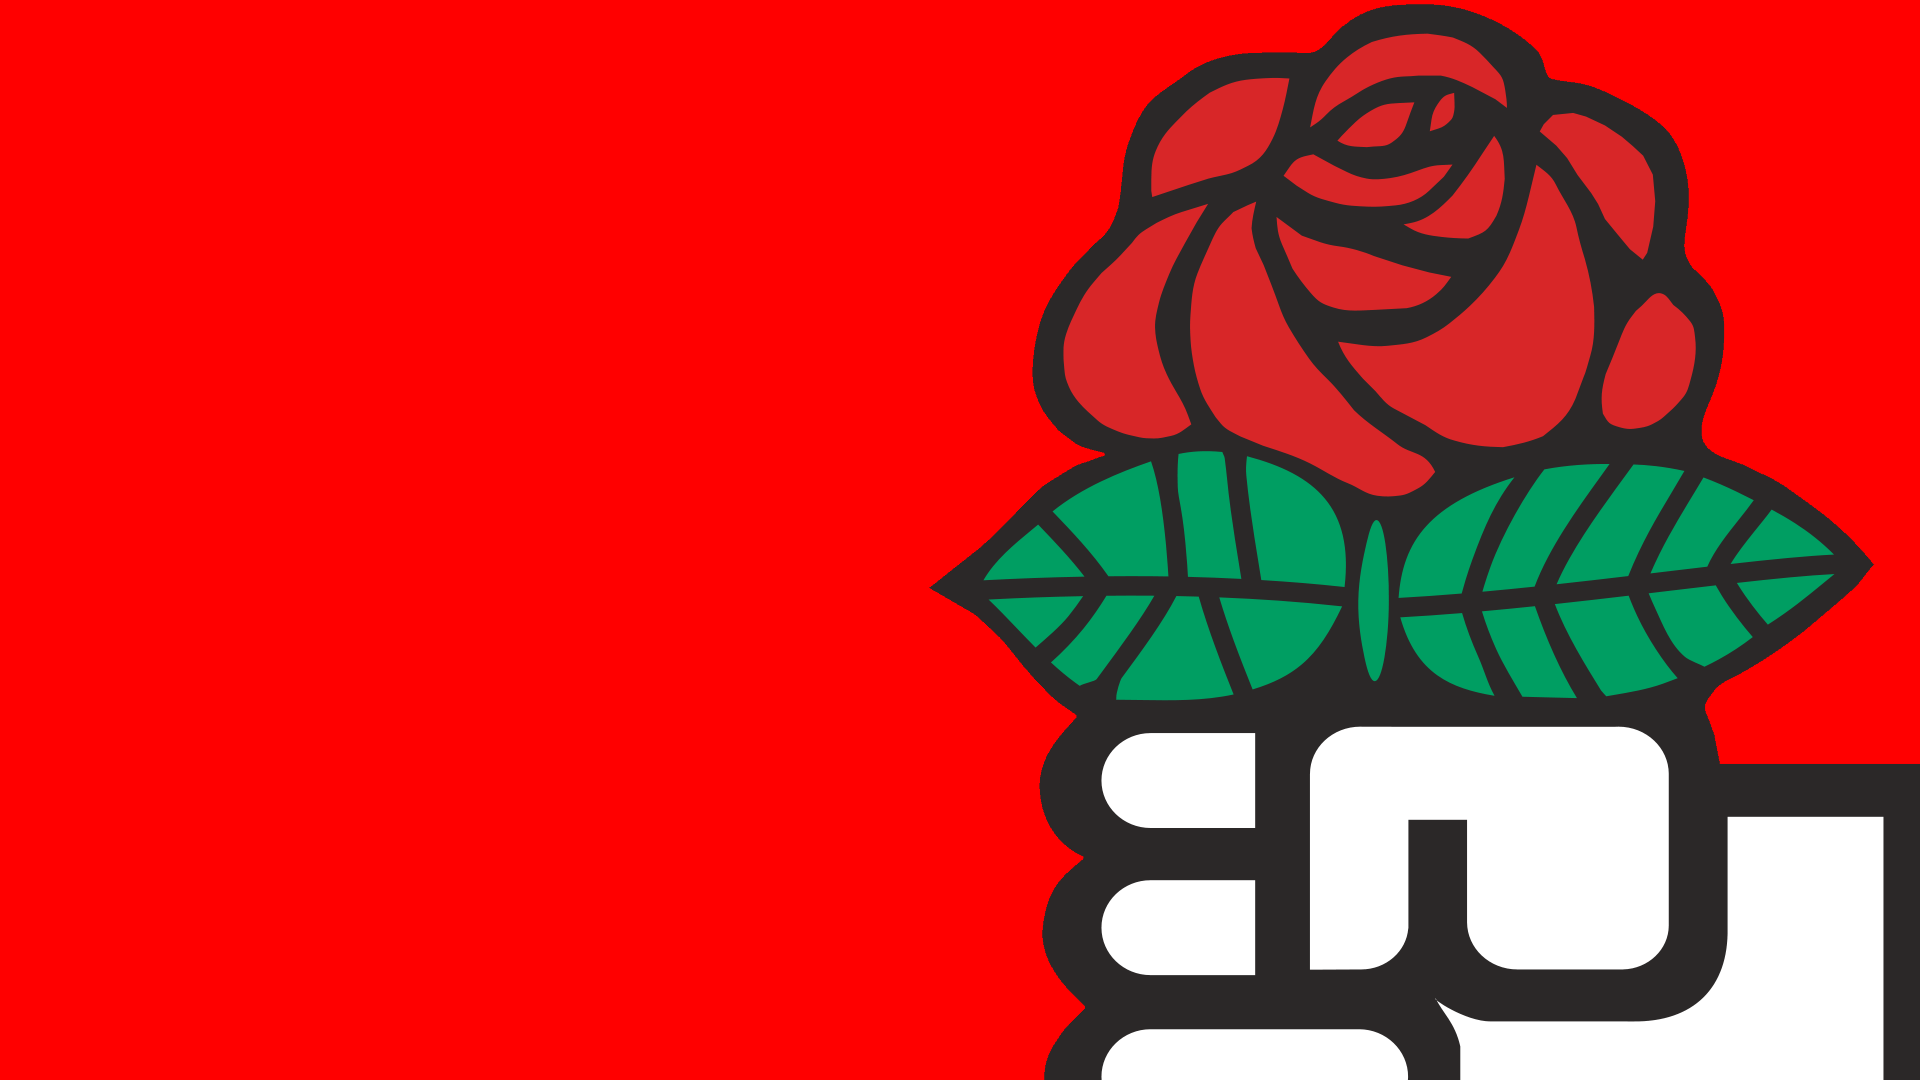 Socialist Logo - Delete Your Account